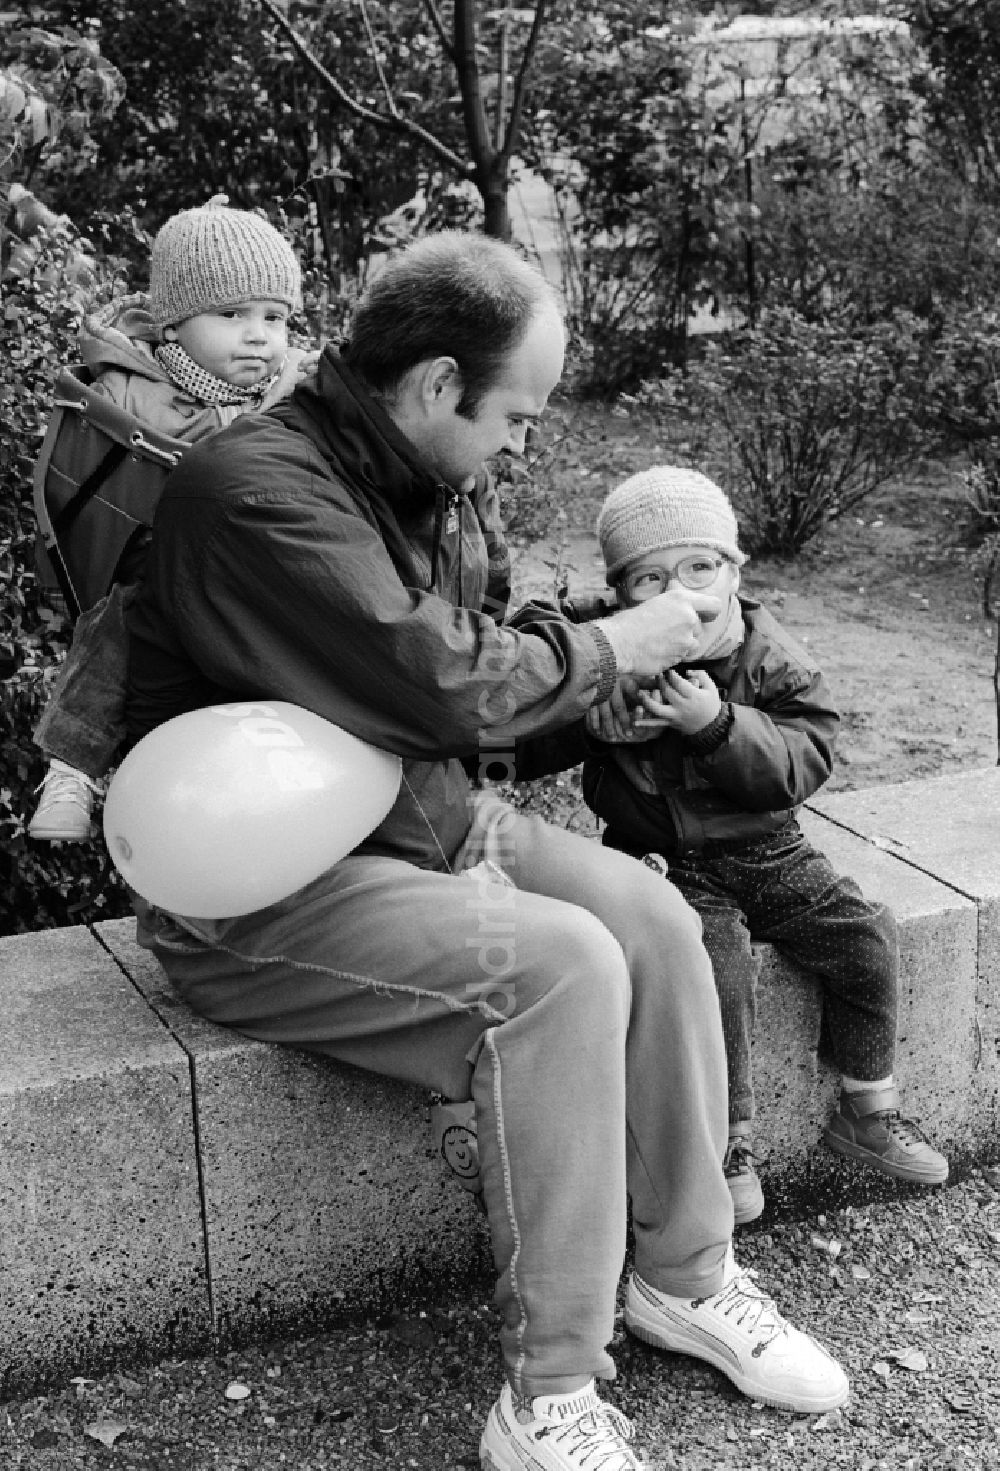 Berlin: Vater mit zwei Kindern in Berlin, der ehemaligen Hauptstadt der DDR, Deutsche Demokratische Republik